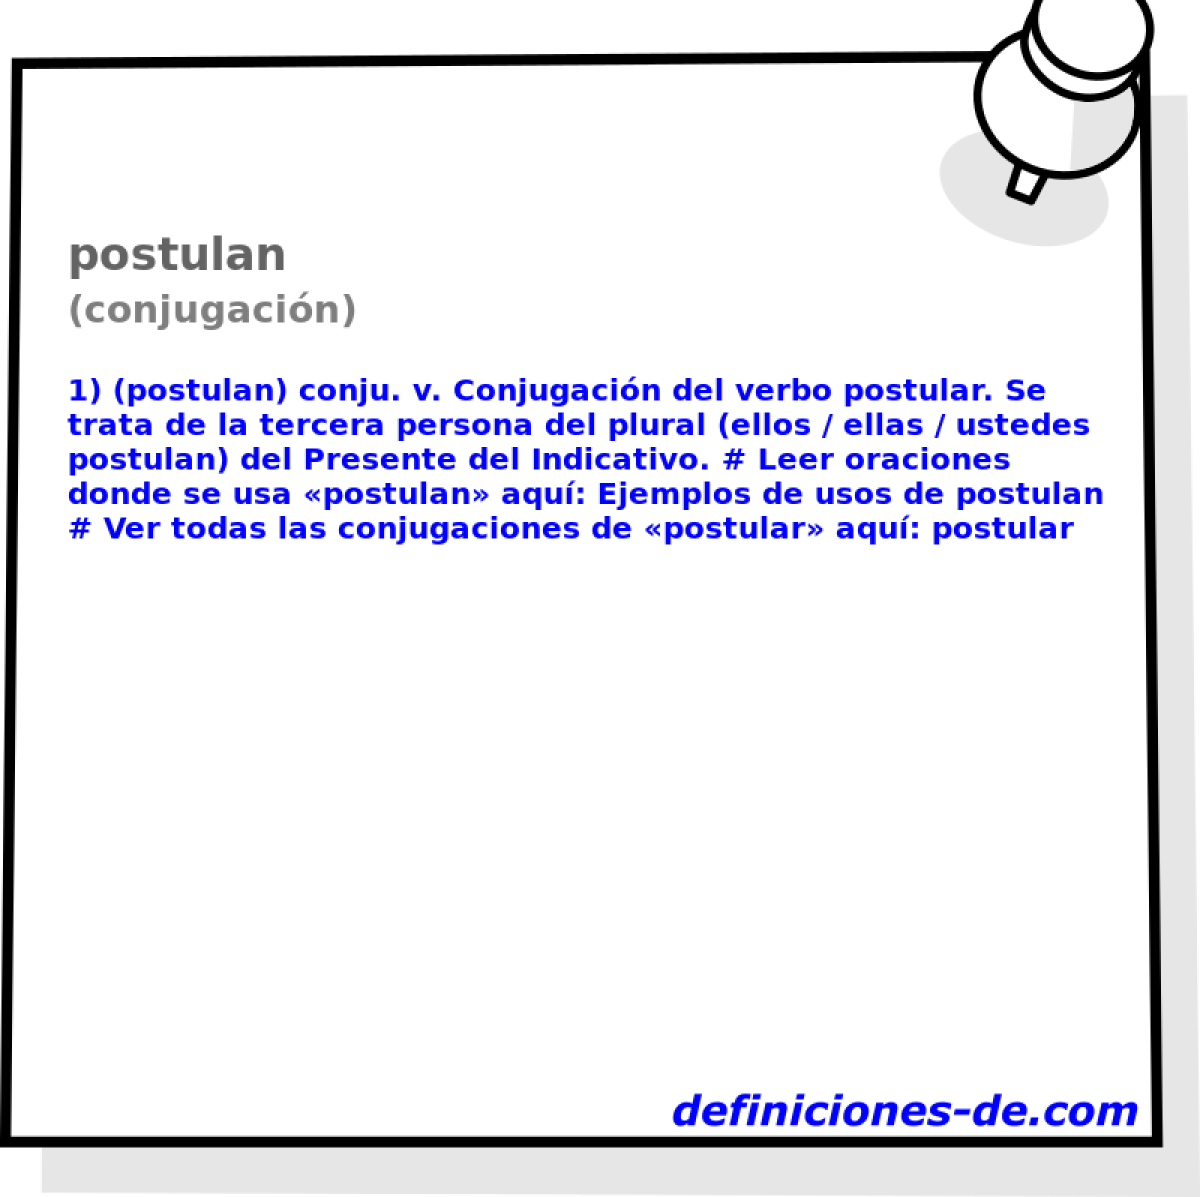 postulan (conjugacin)